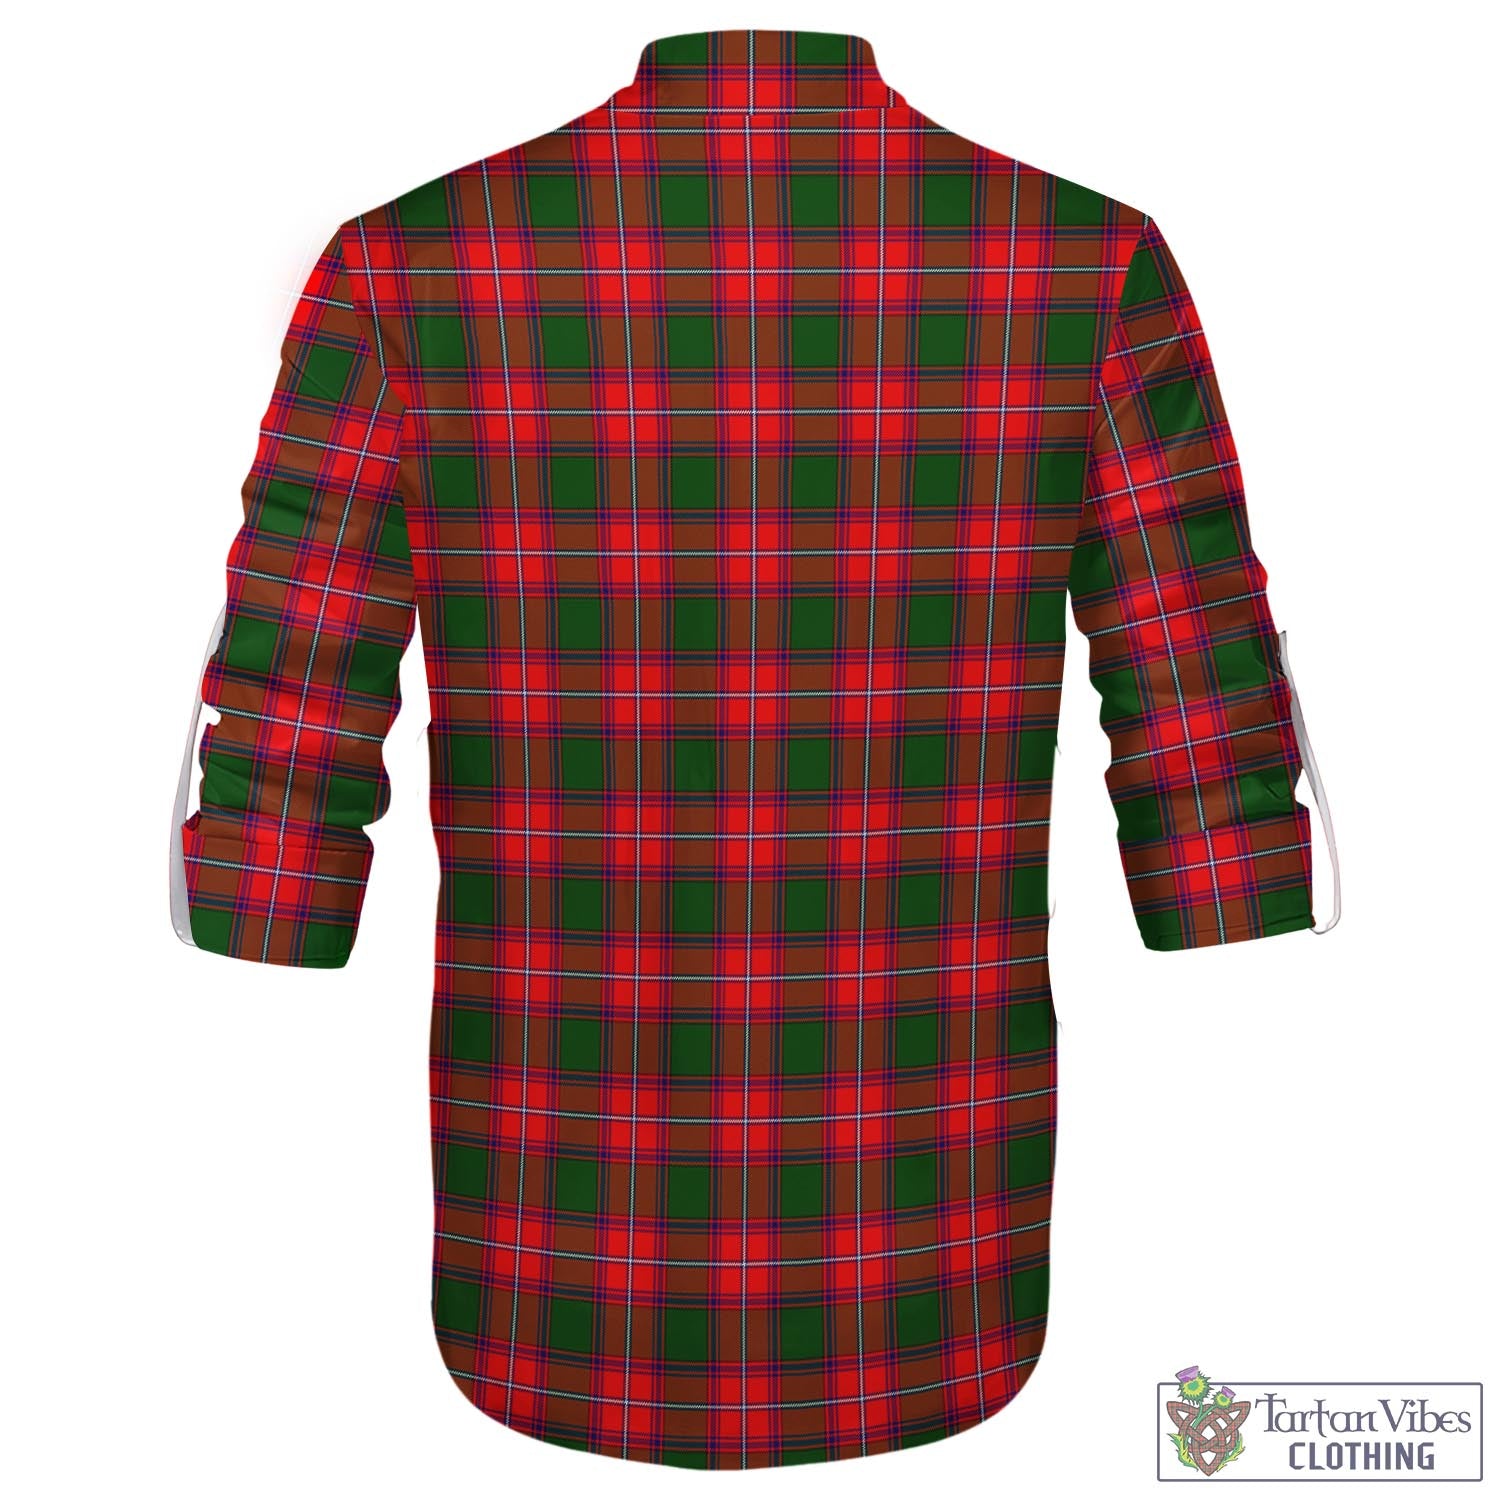 Tartan Vibes Clothing Rattray Modern Tartan Men's Scottish Traditional Jacobite Ghillie Kilt Shirt with Family Crest